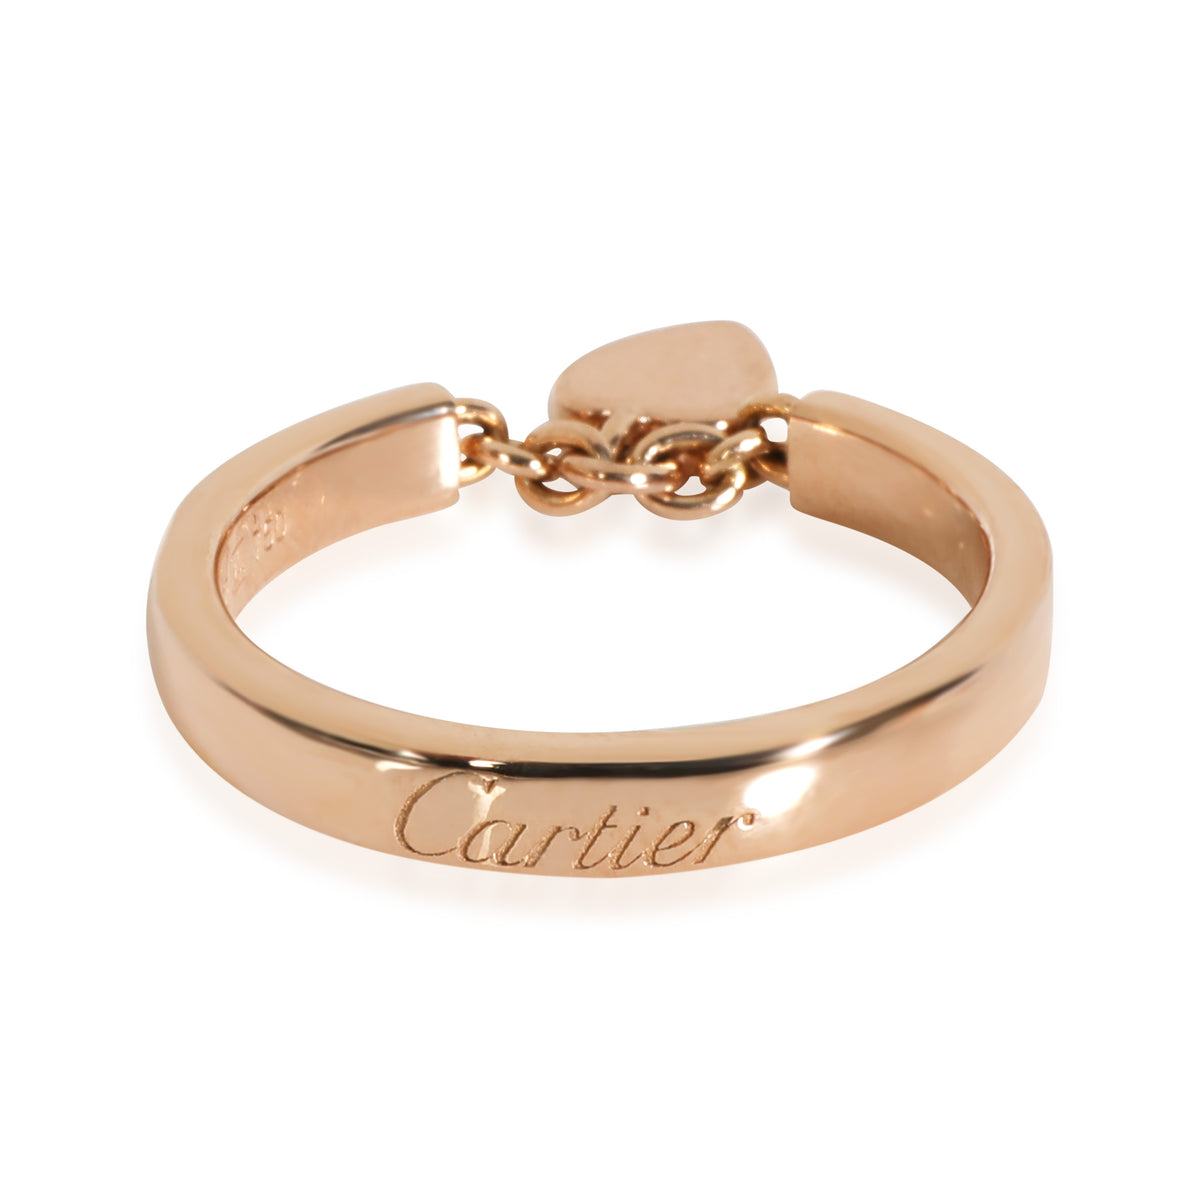 Cartier Cartier Mon Amor Heart Charm Ring in 18k Rose Gold